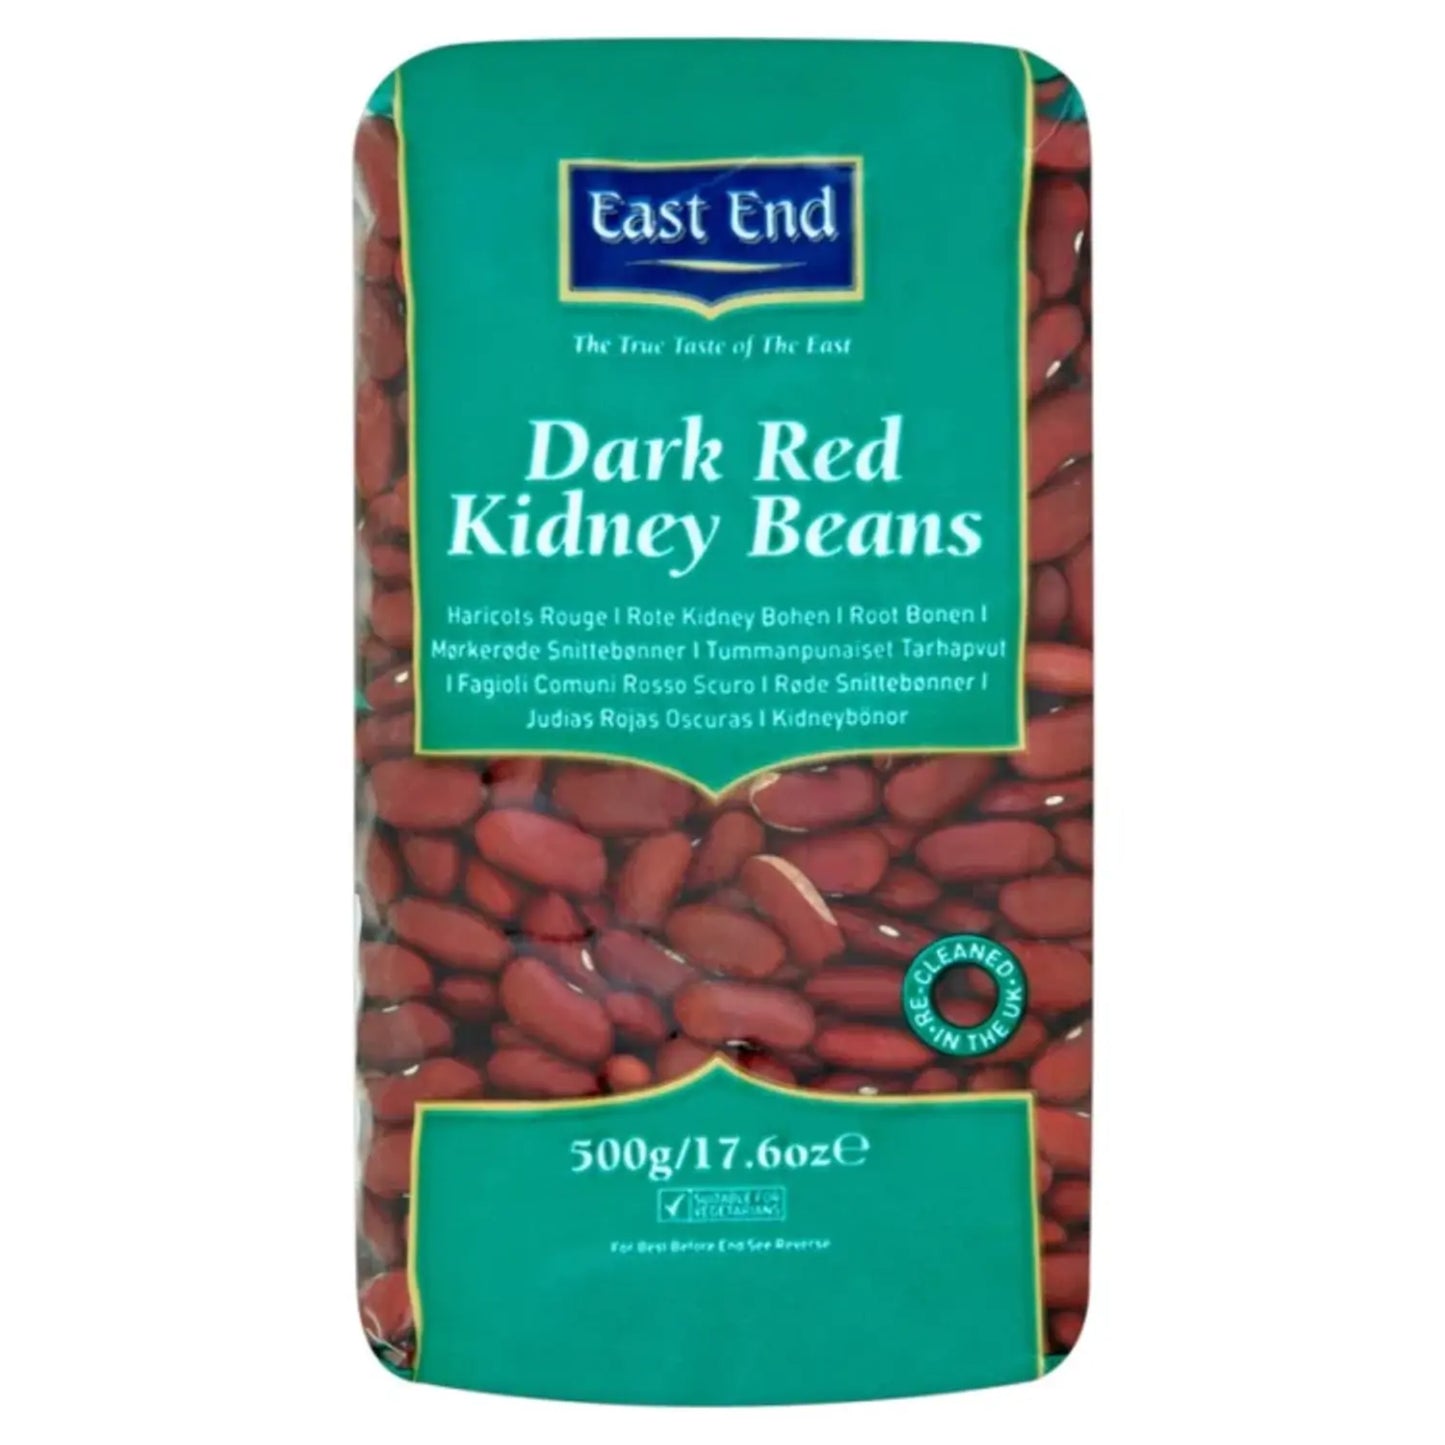 East End Dark Red Kidney Beans